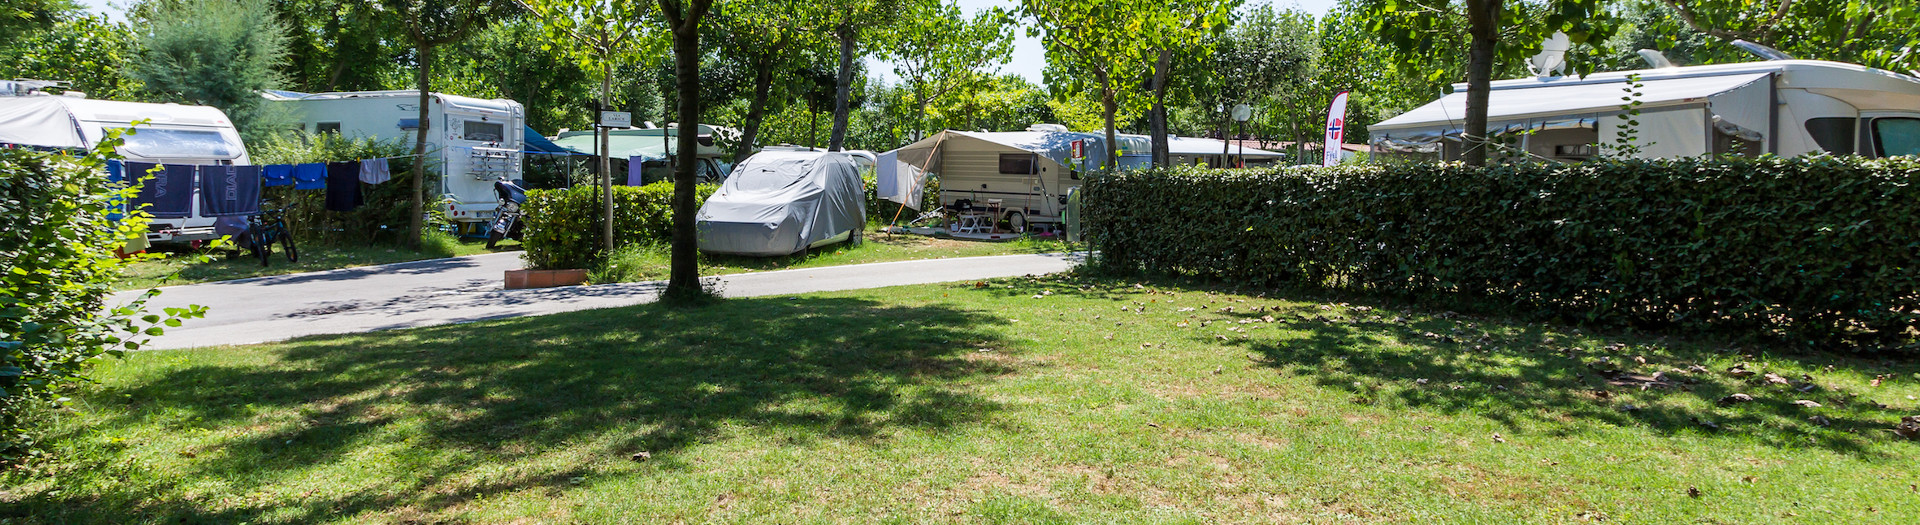 Piazzola Campeggio Camper Media Camping Rubicone